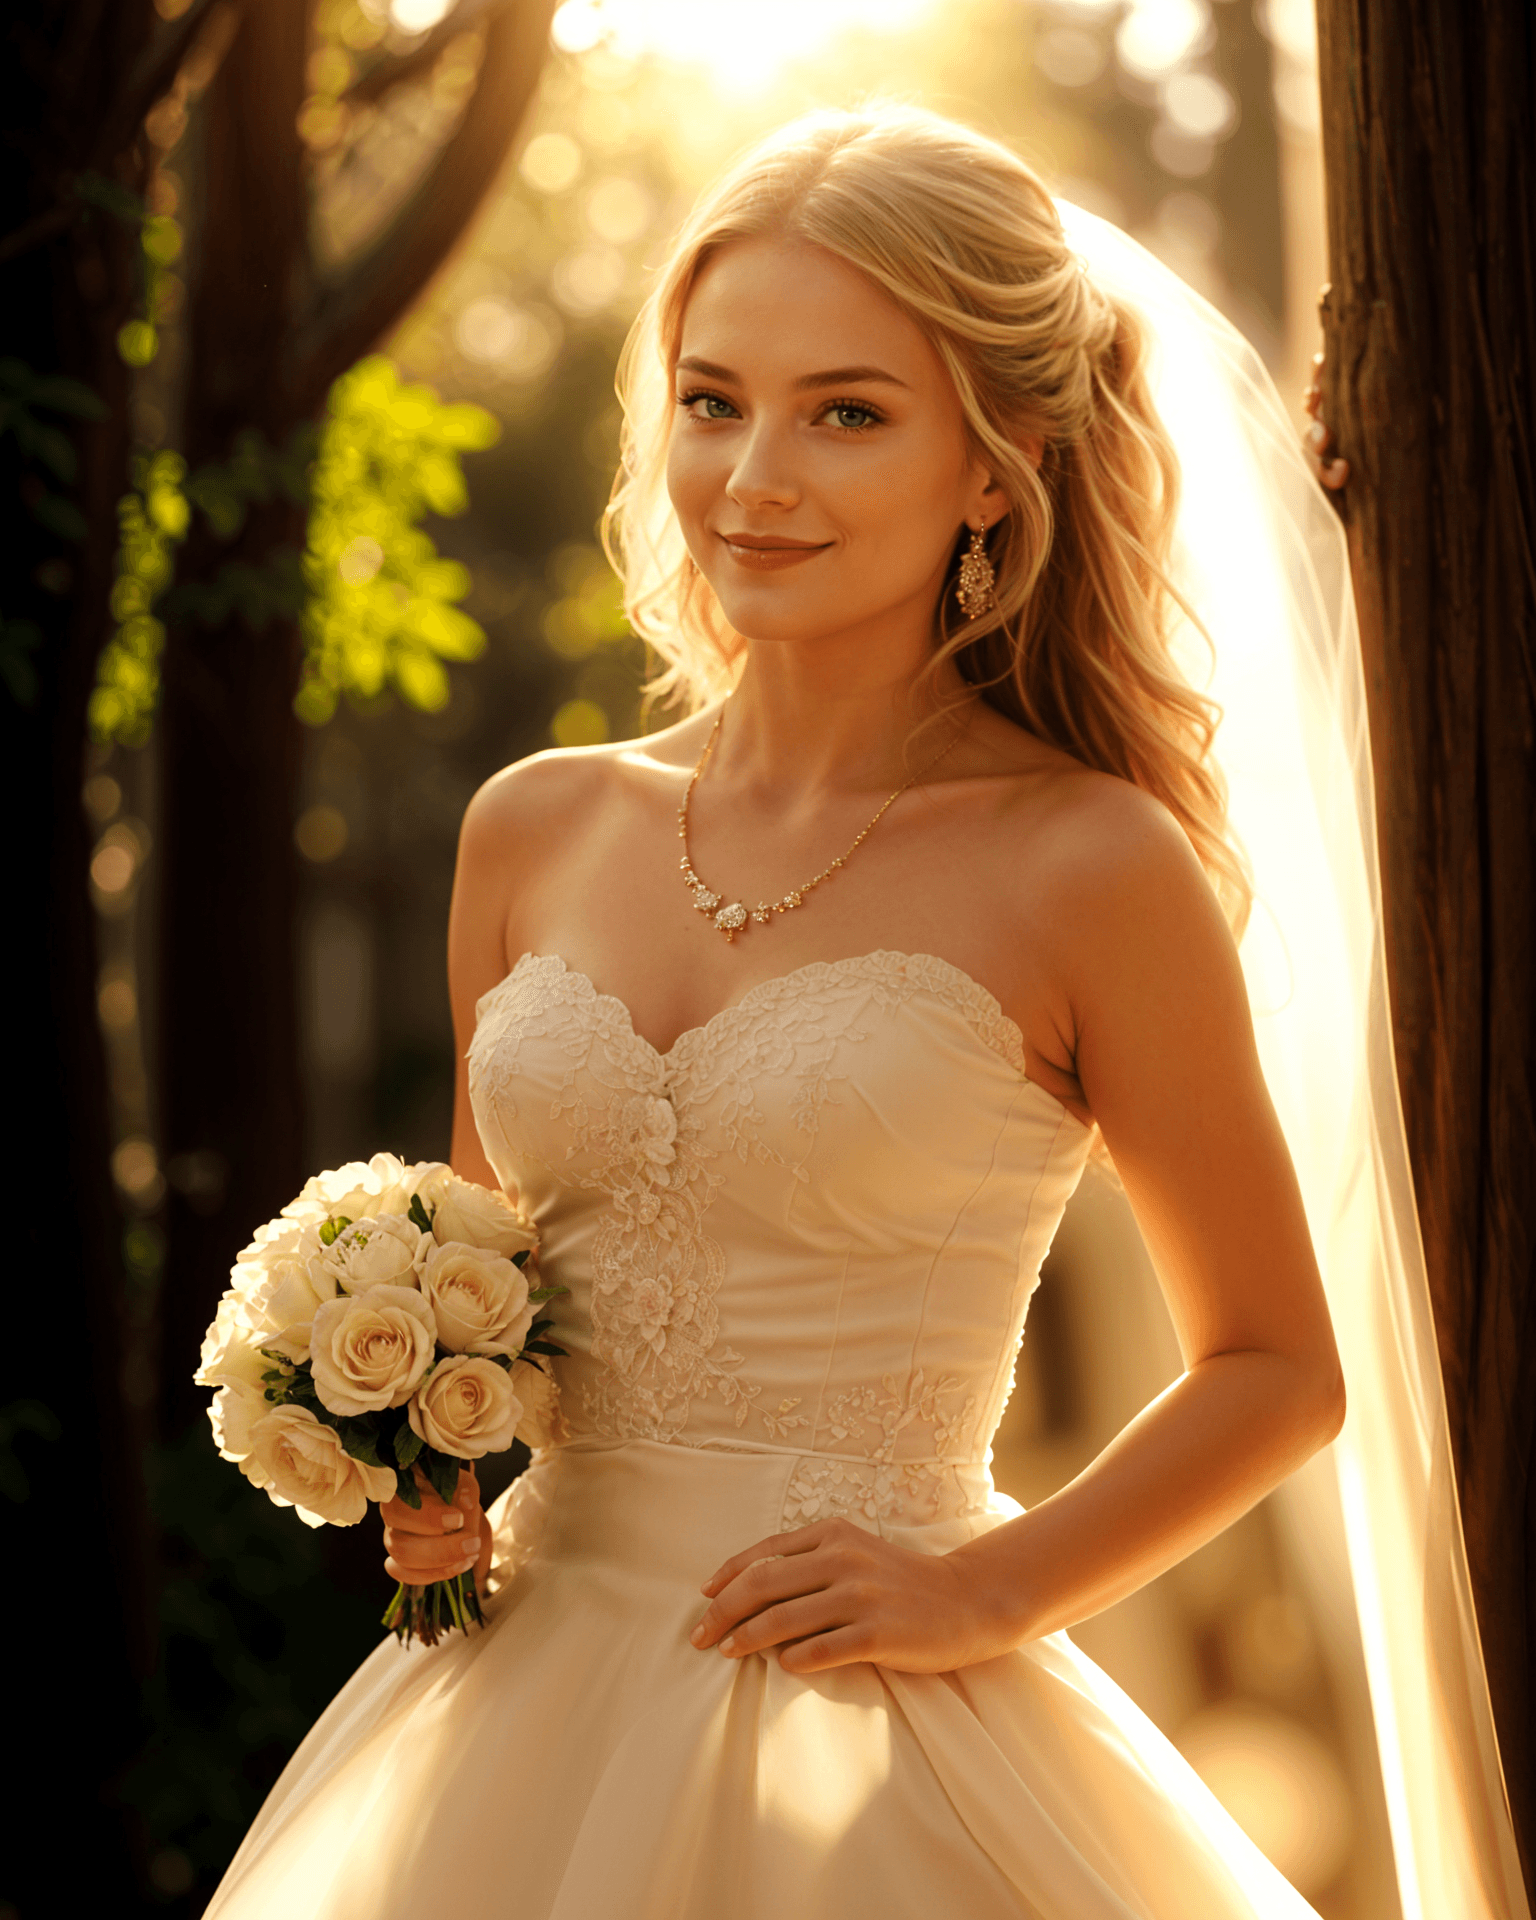 Wedding photo with natural lighting